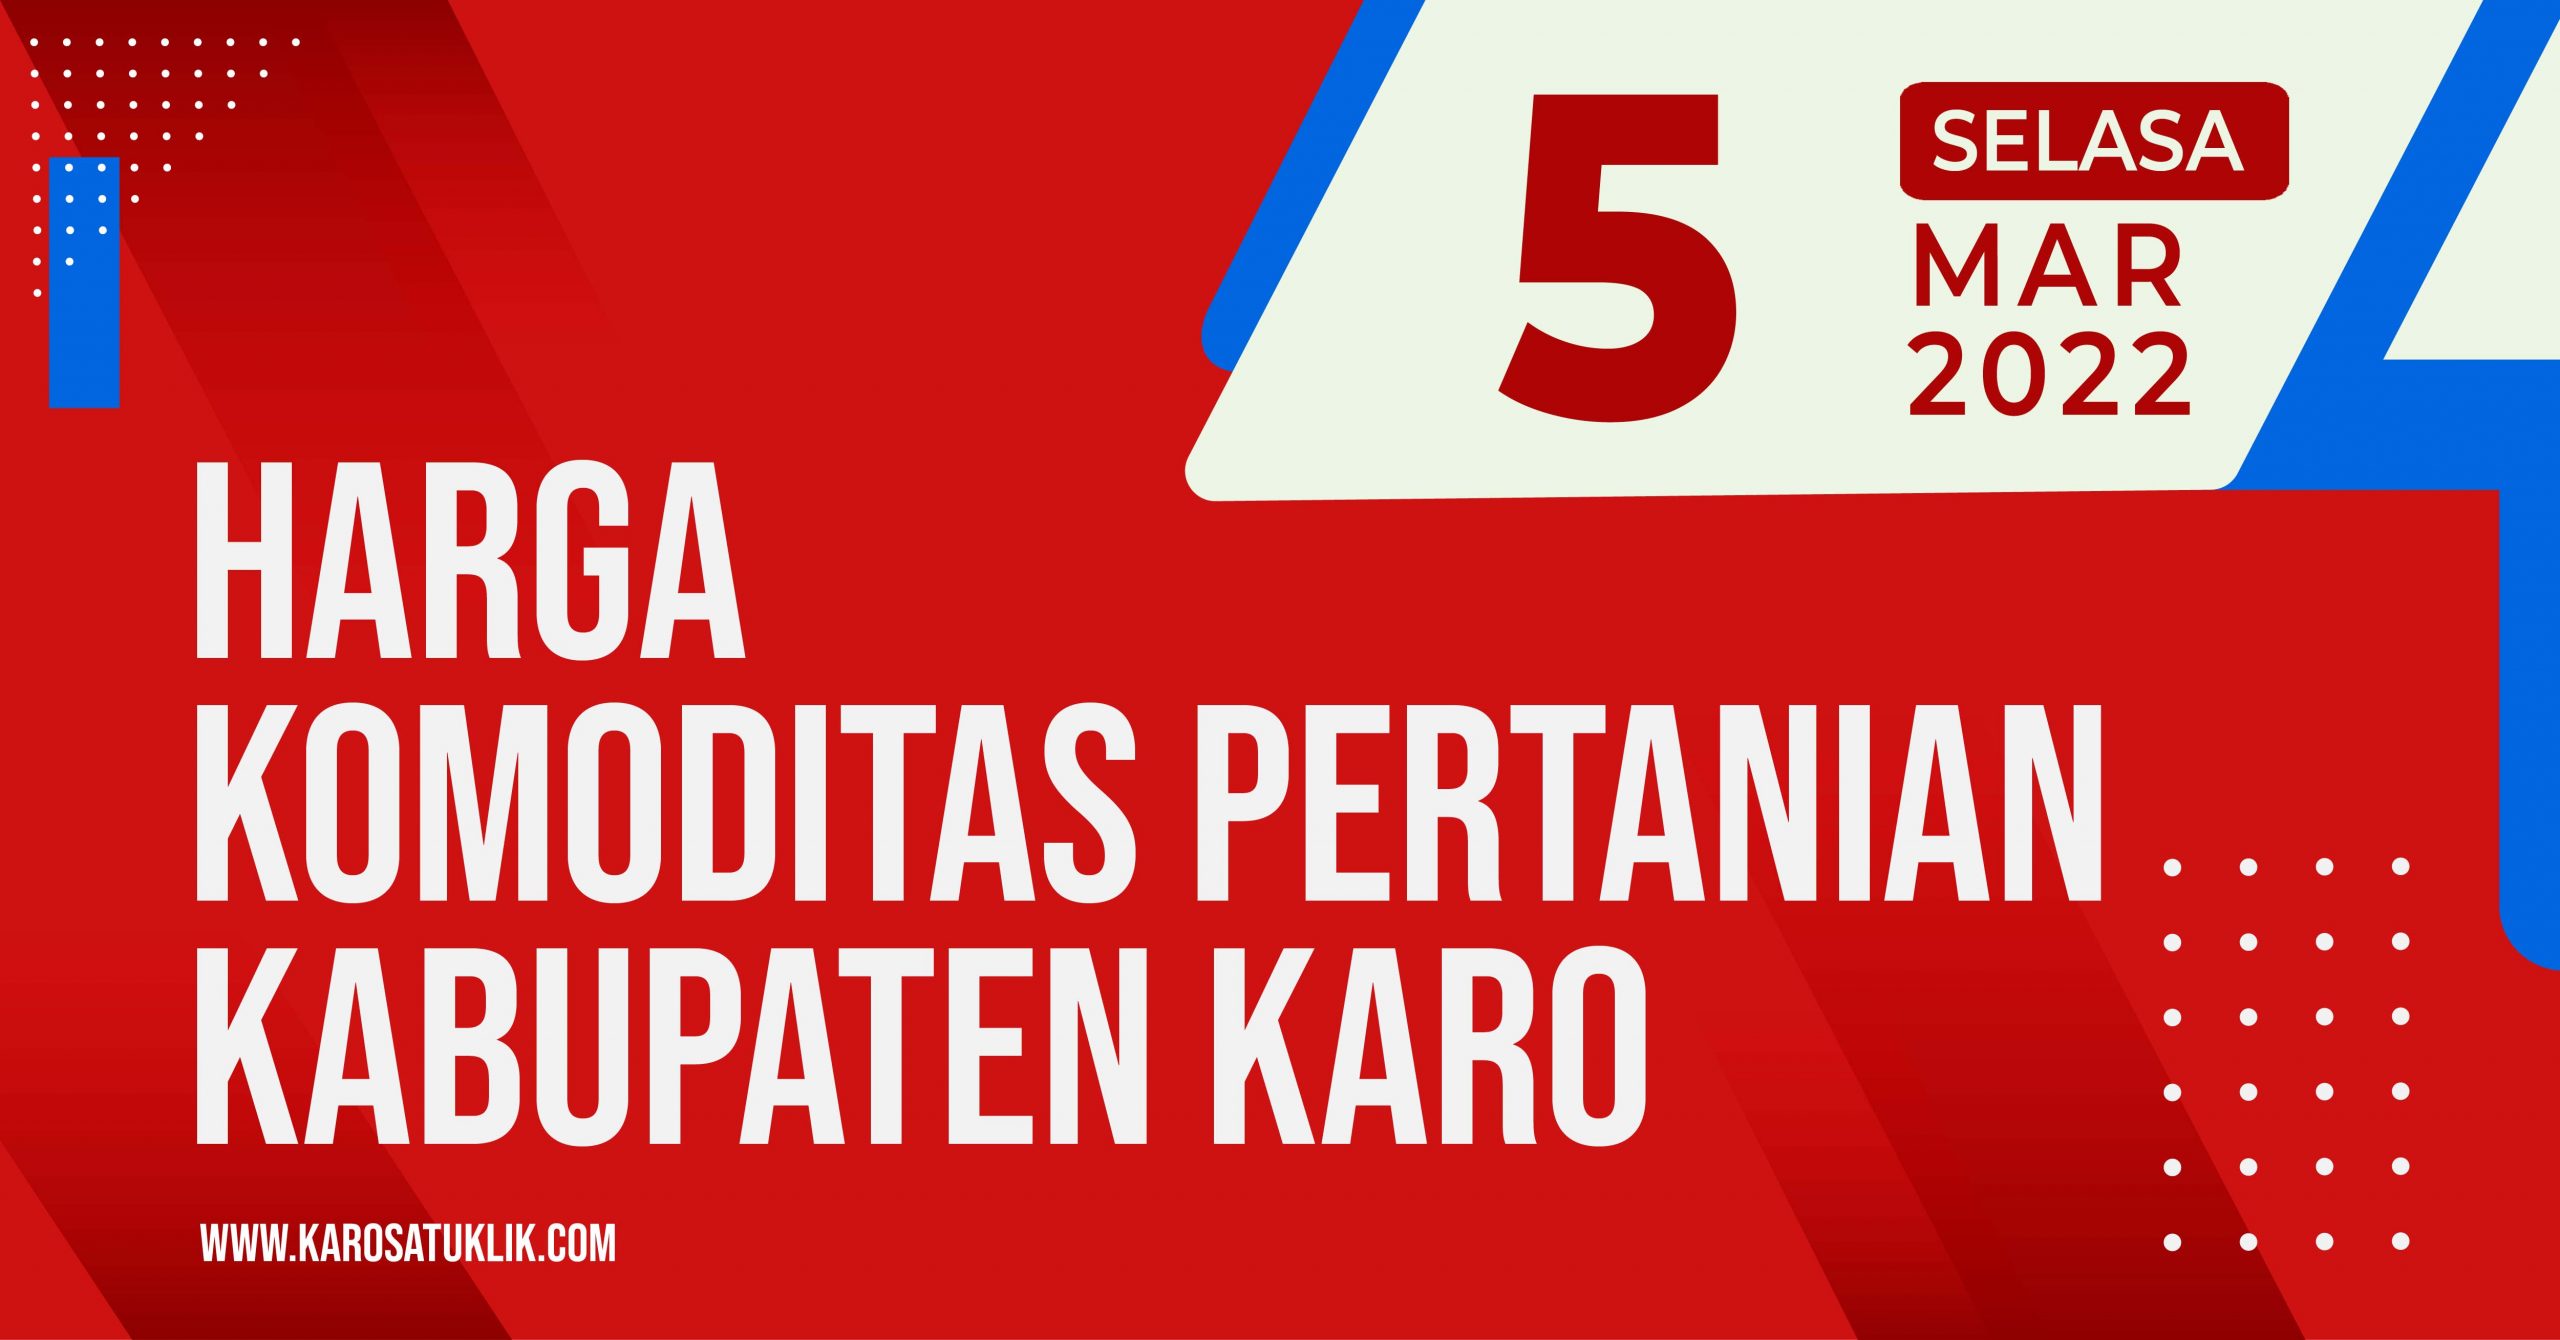 Daftar Harga Komoditas Pertanian Kabupaten Karo, Selasa 5 April 2022